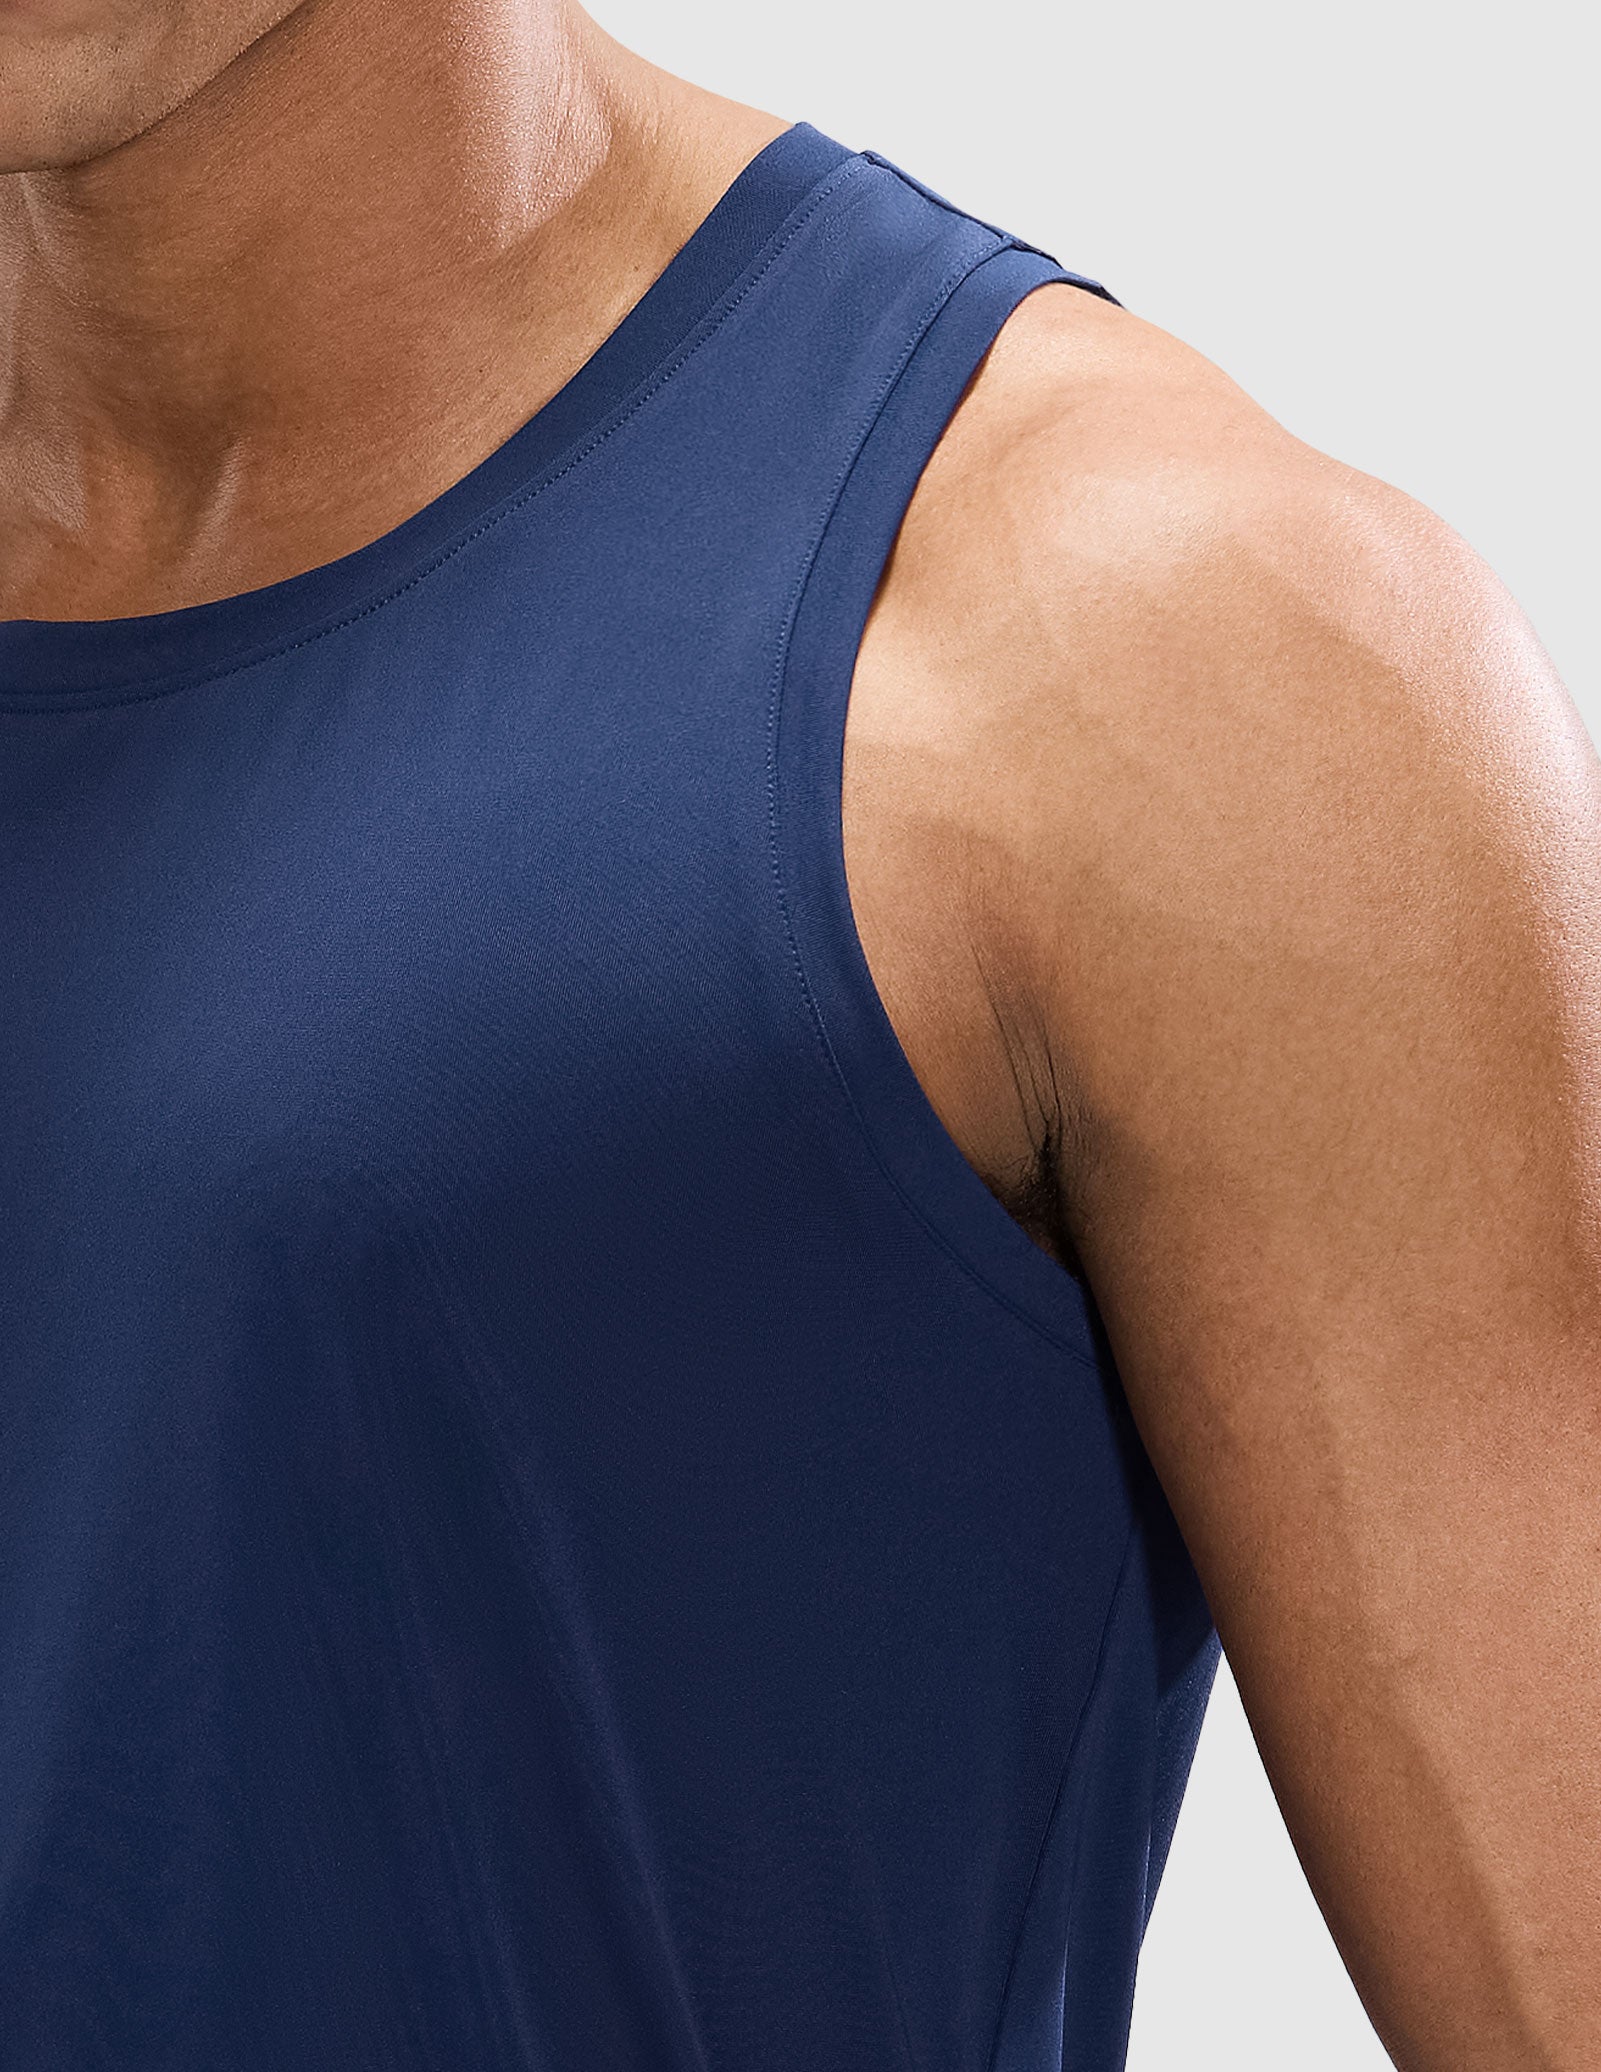 Men's Tank Tops Workout Sleeveless Tee Shirts